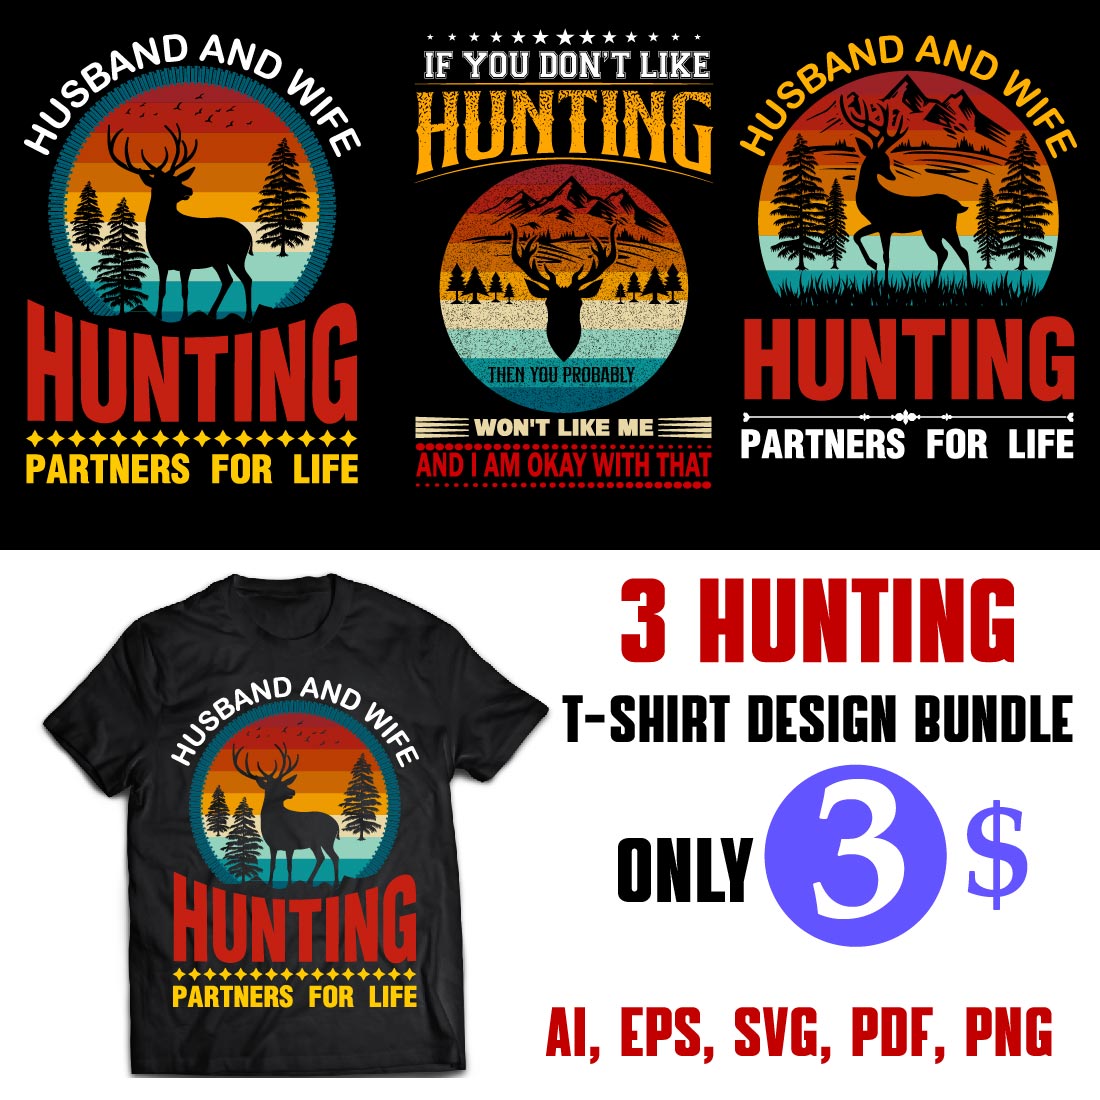 Hunting T-shirt Design Bundles preview image.